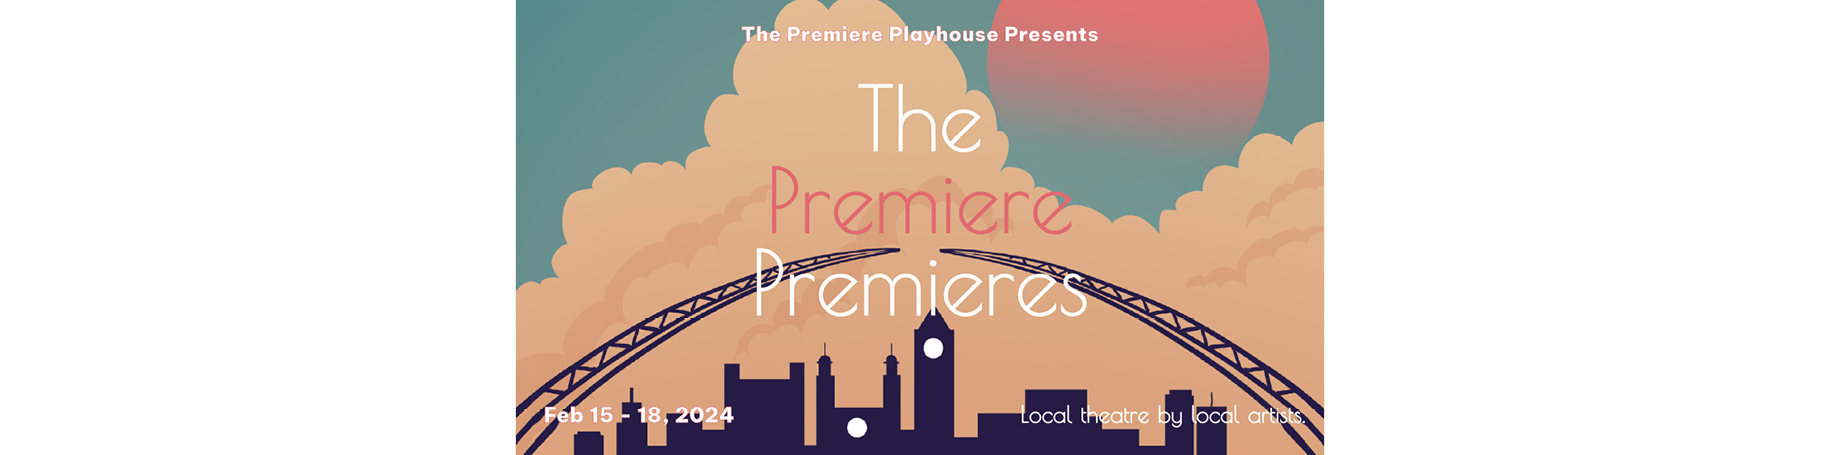 The Premiere Playhouse presents The Premiere Premieres